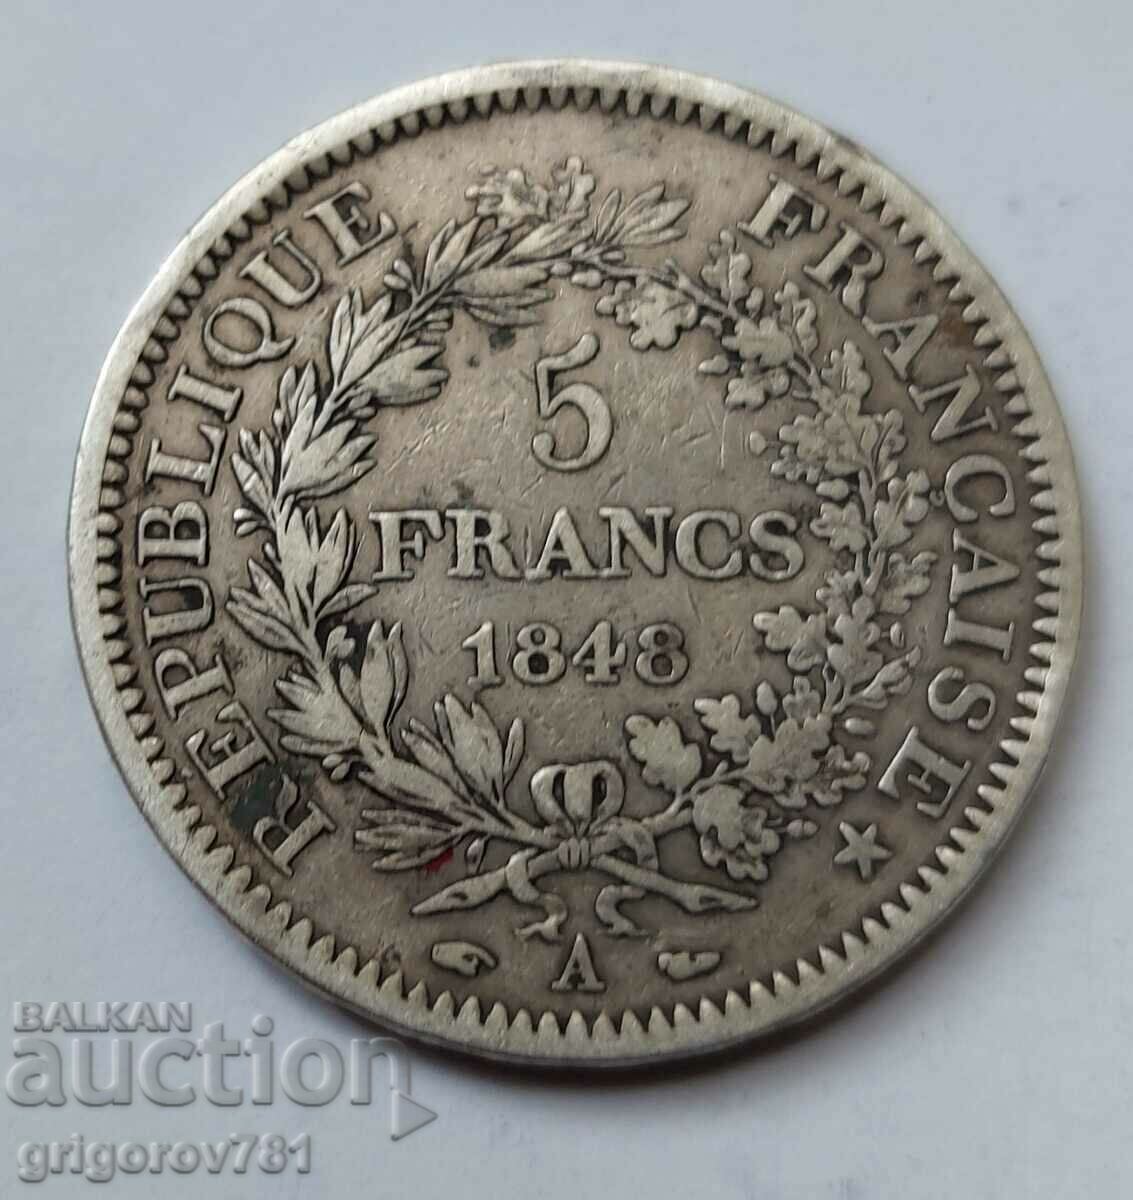 5 Francs Silver France 1848 A - Silver Coin #247